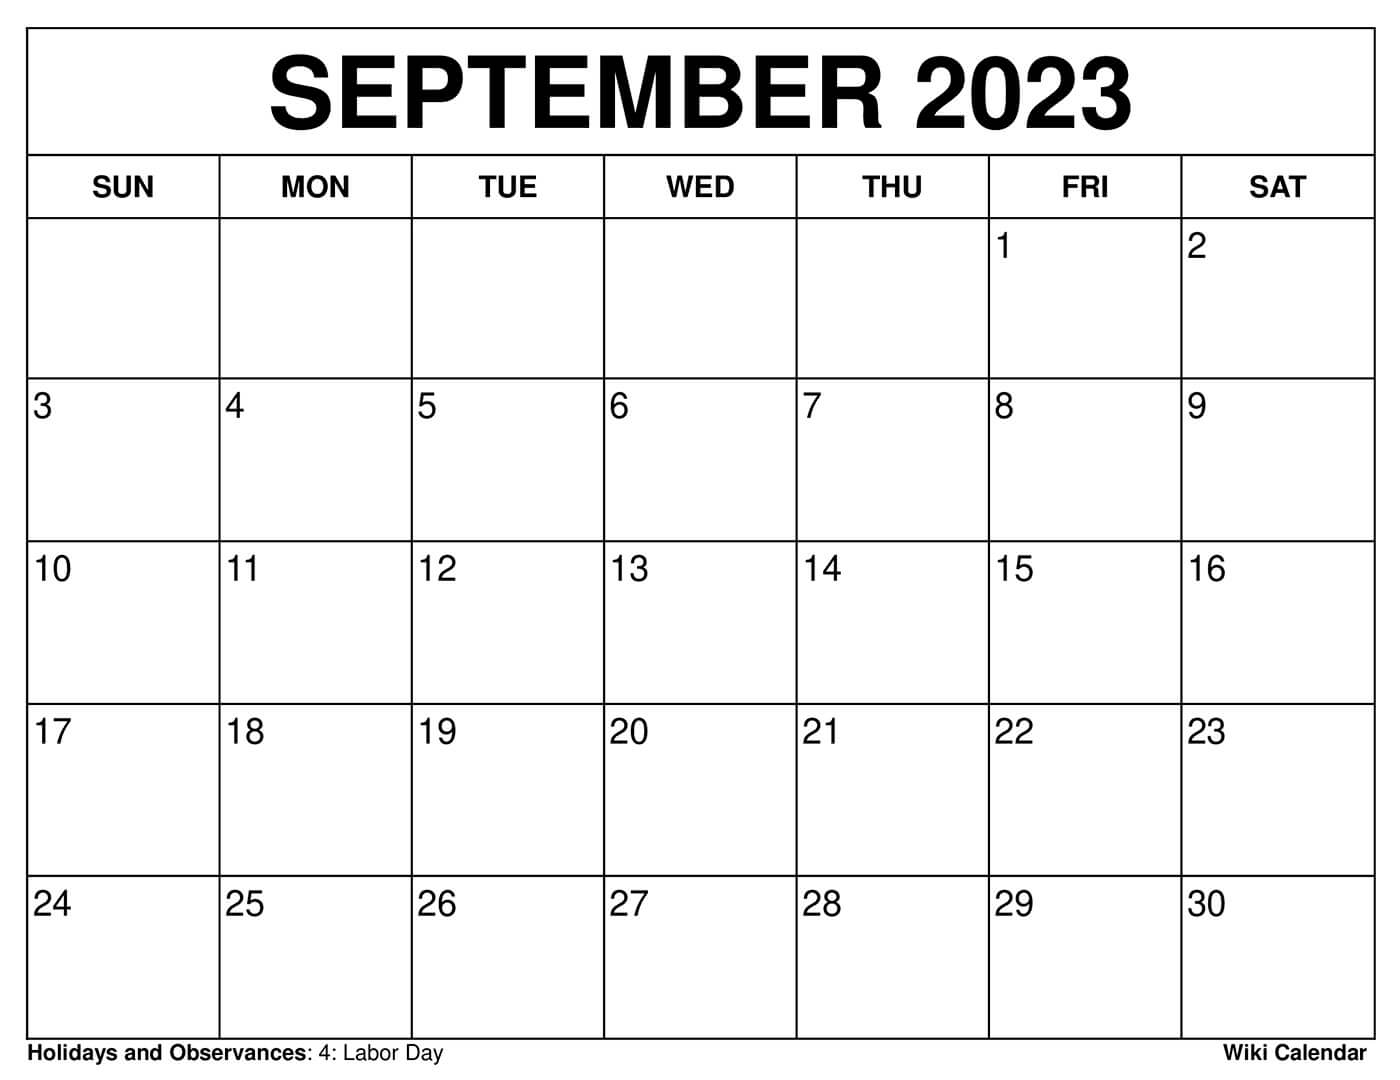 Free September 2022 Calendar Free Printable September 2022 Calendars - Wiki Calendar